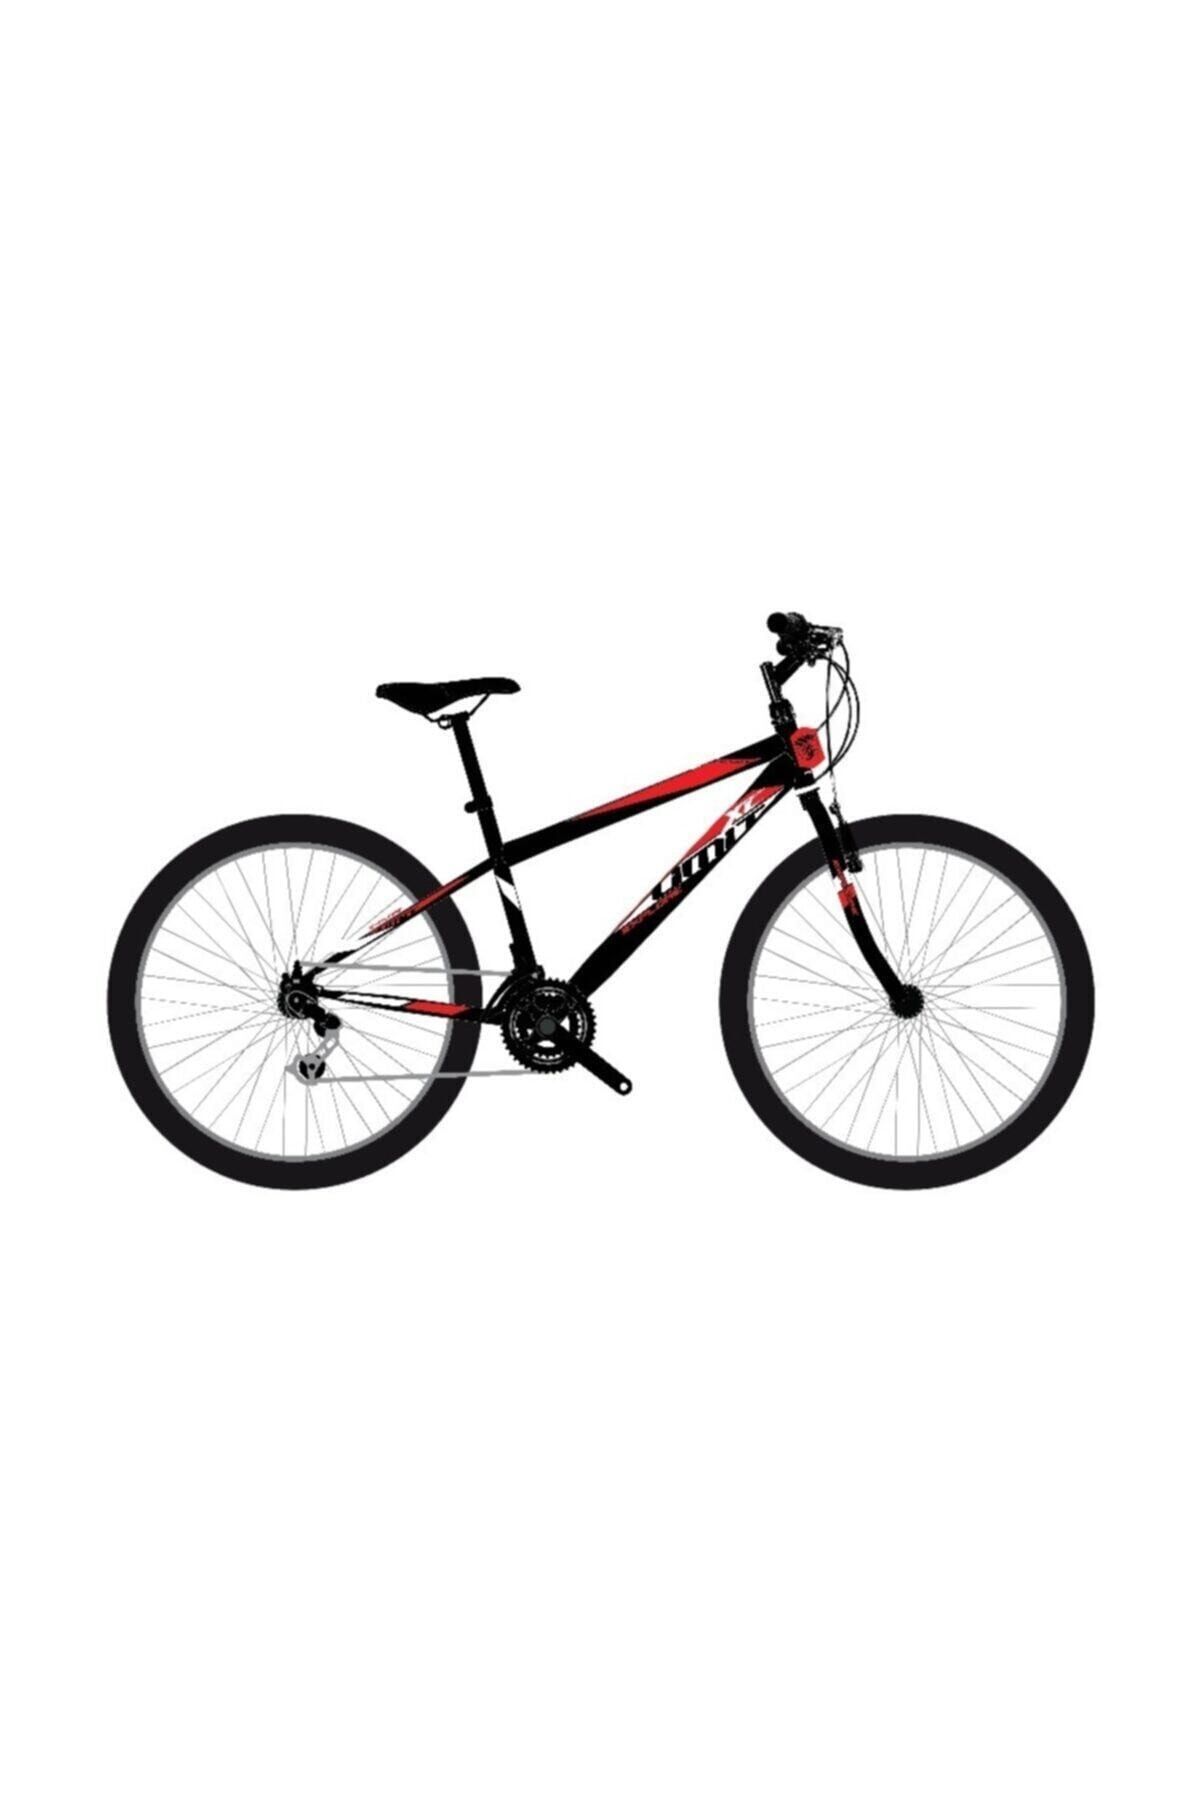 Ümit Bisiklet 2633 Siyah-kırmızı 26 Jant 21 Vites Explorer Dağ Ve Şehir Bisikleti M-mtb-v-21-srn - 2020 Model